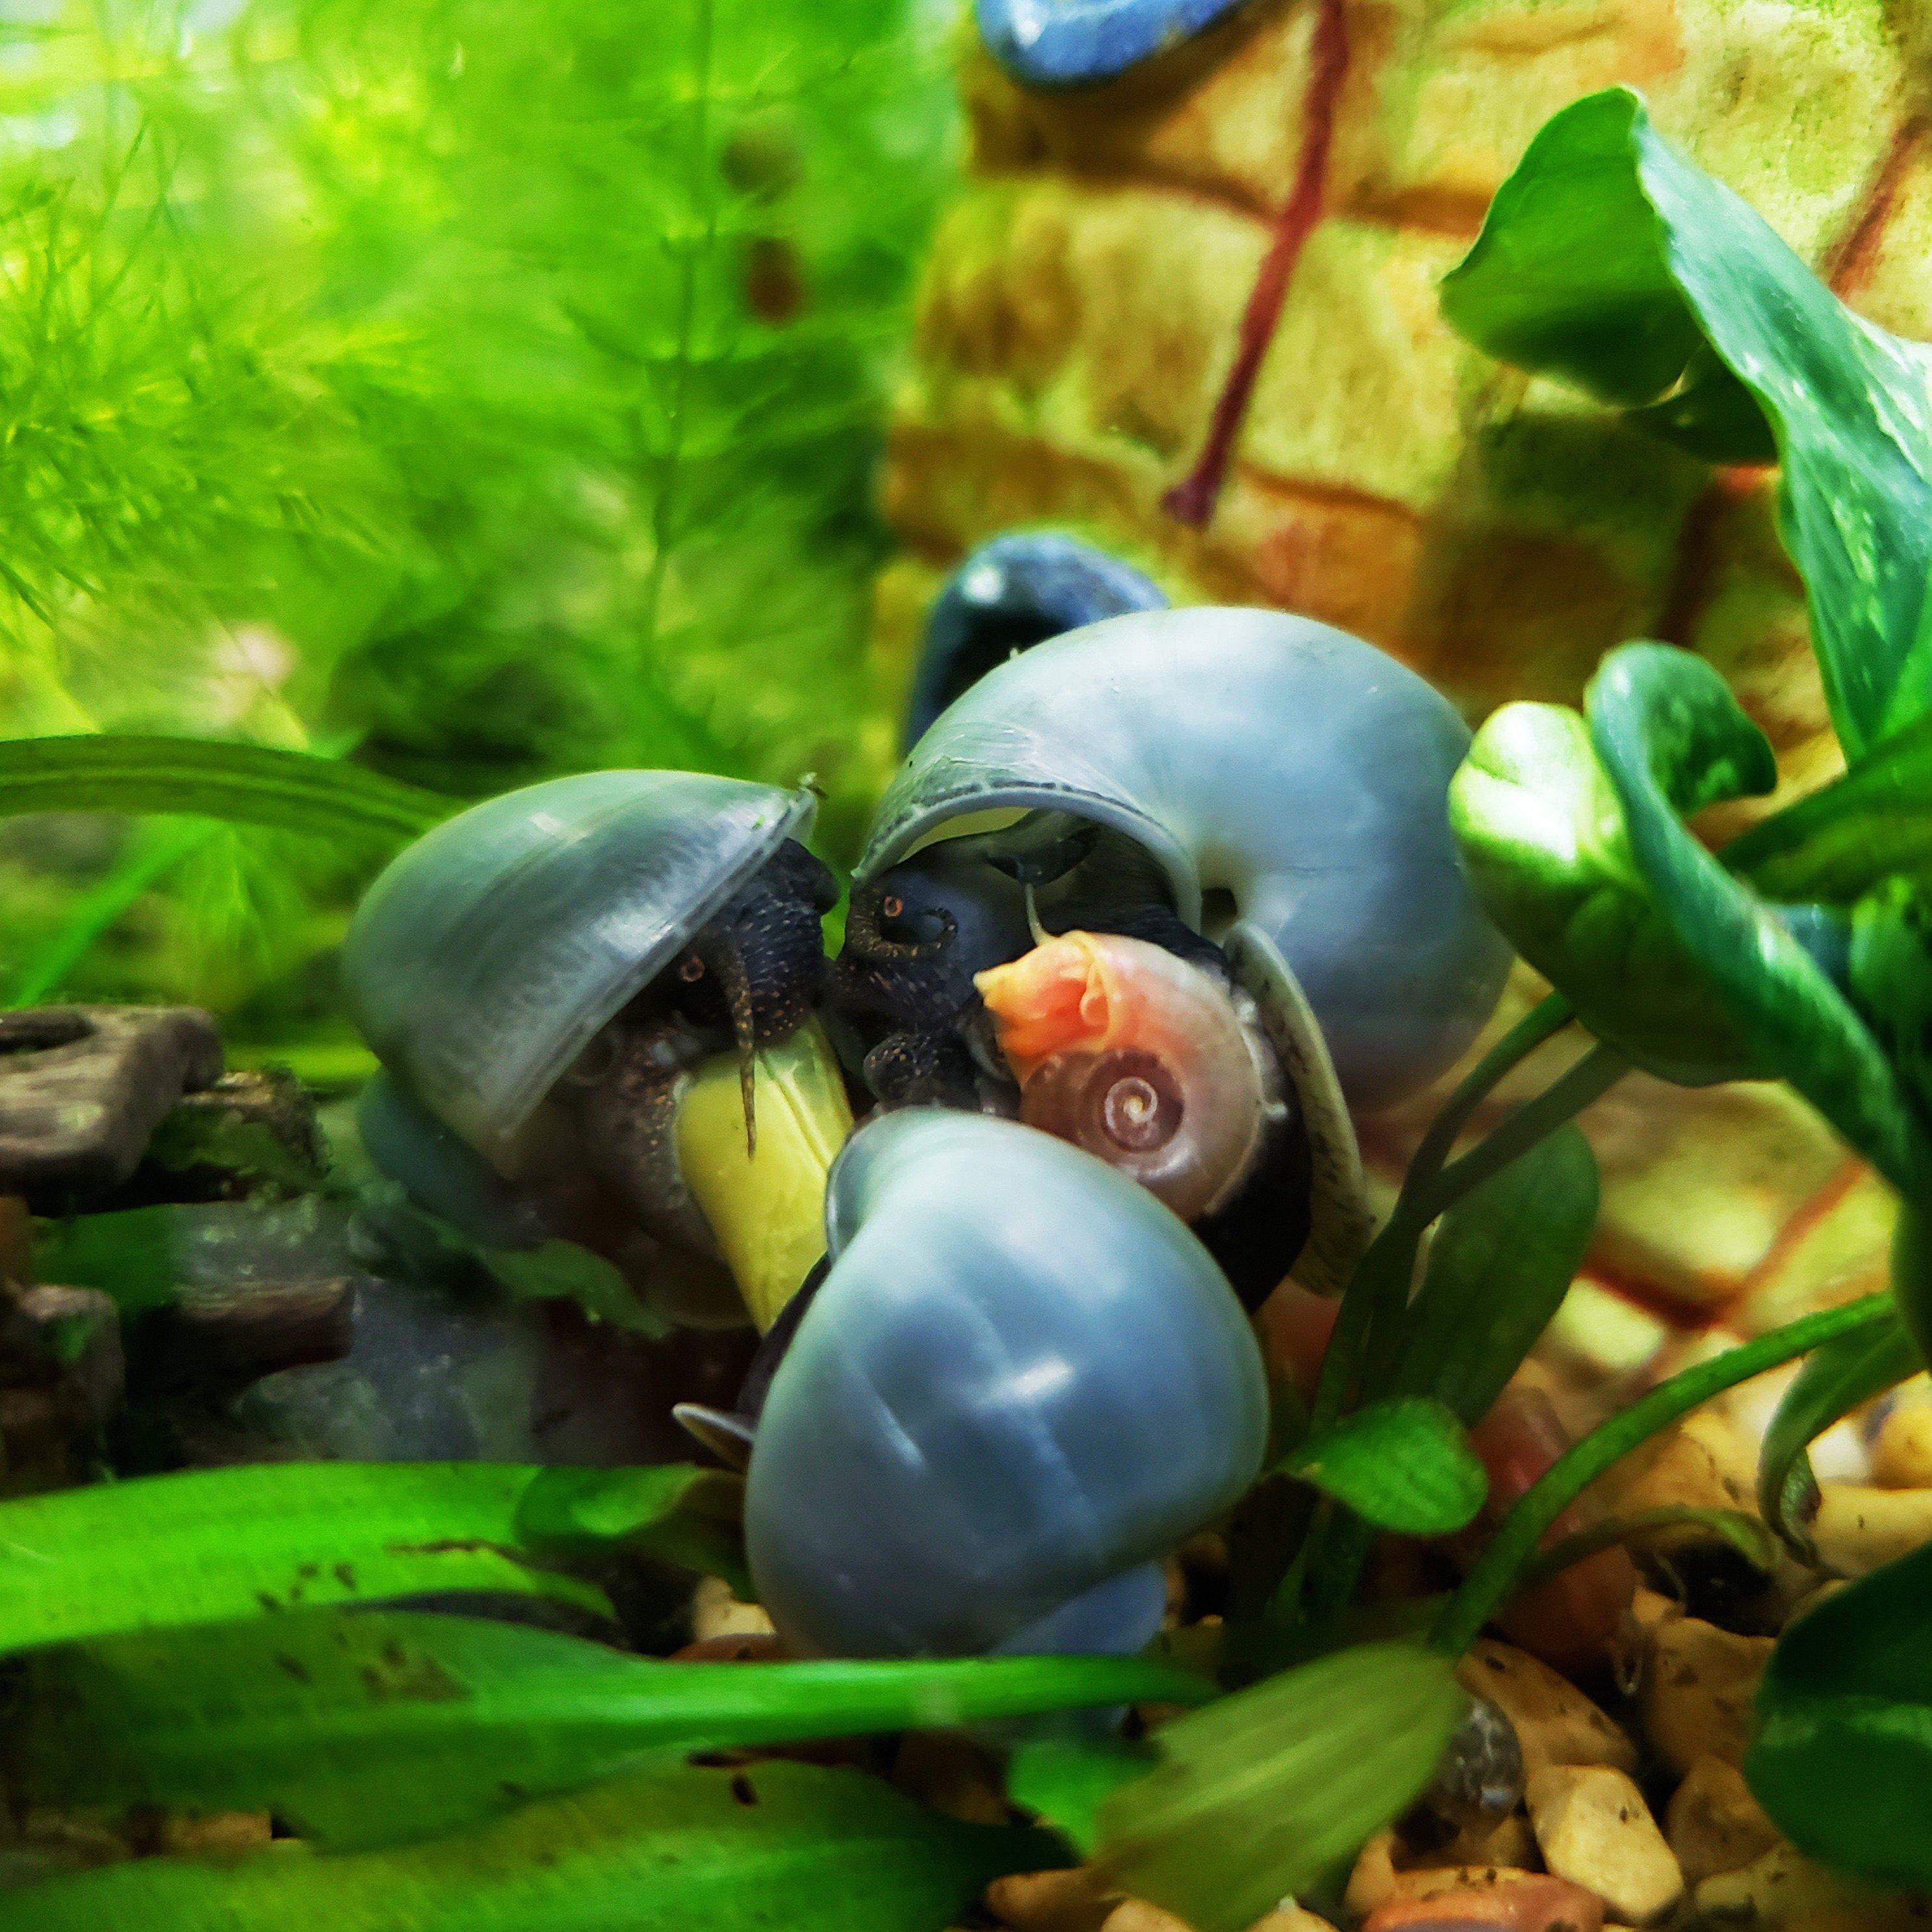 Blue Mystery Snails (Pomacea Bridgesii) - Windy City Aquariums